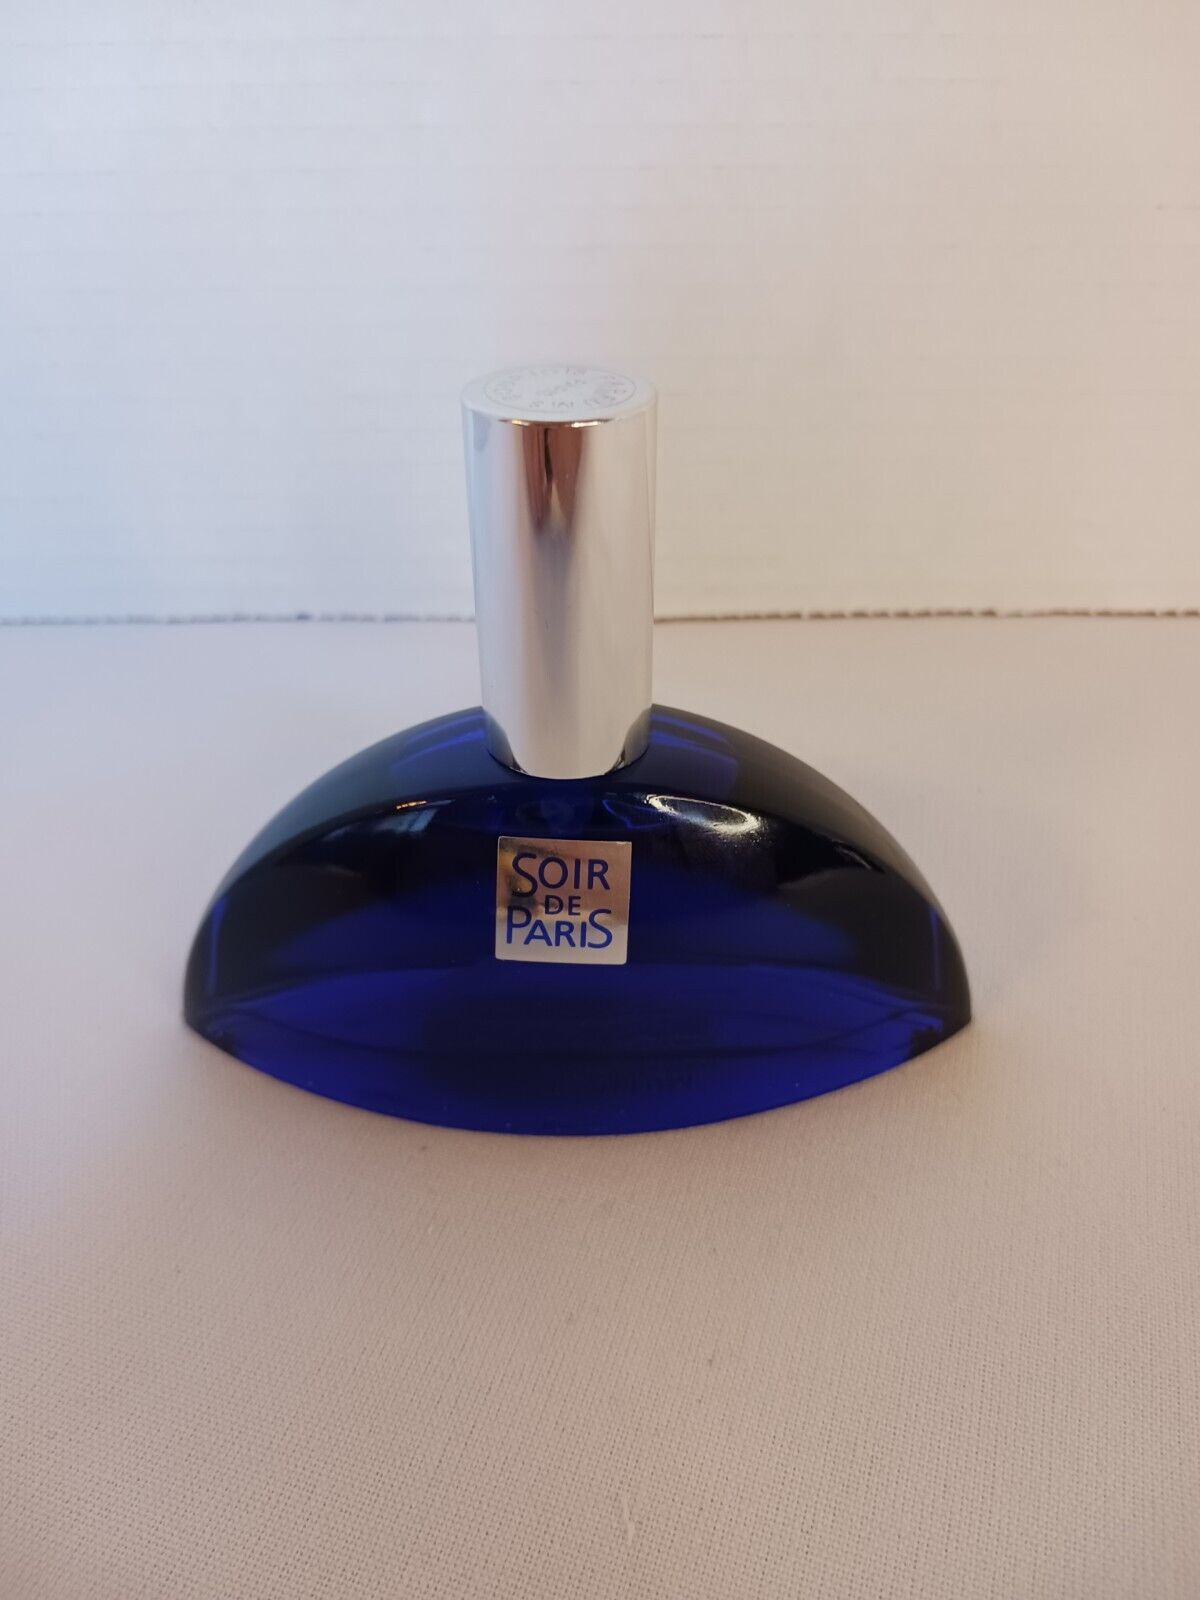 Soir de Paris by Bourjois, 1.6 oz / 50 ml Eau de Parfum Spray New No Box